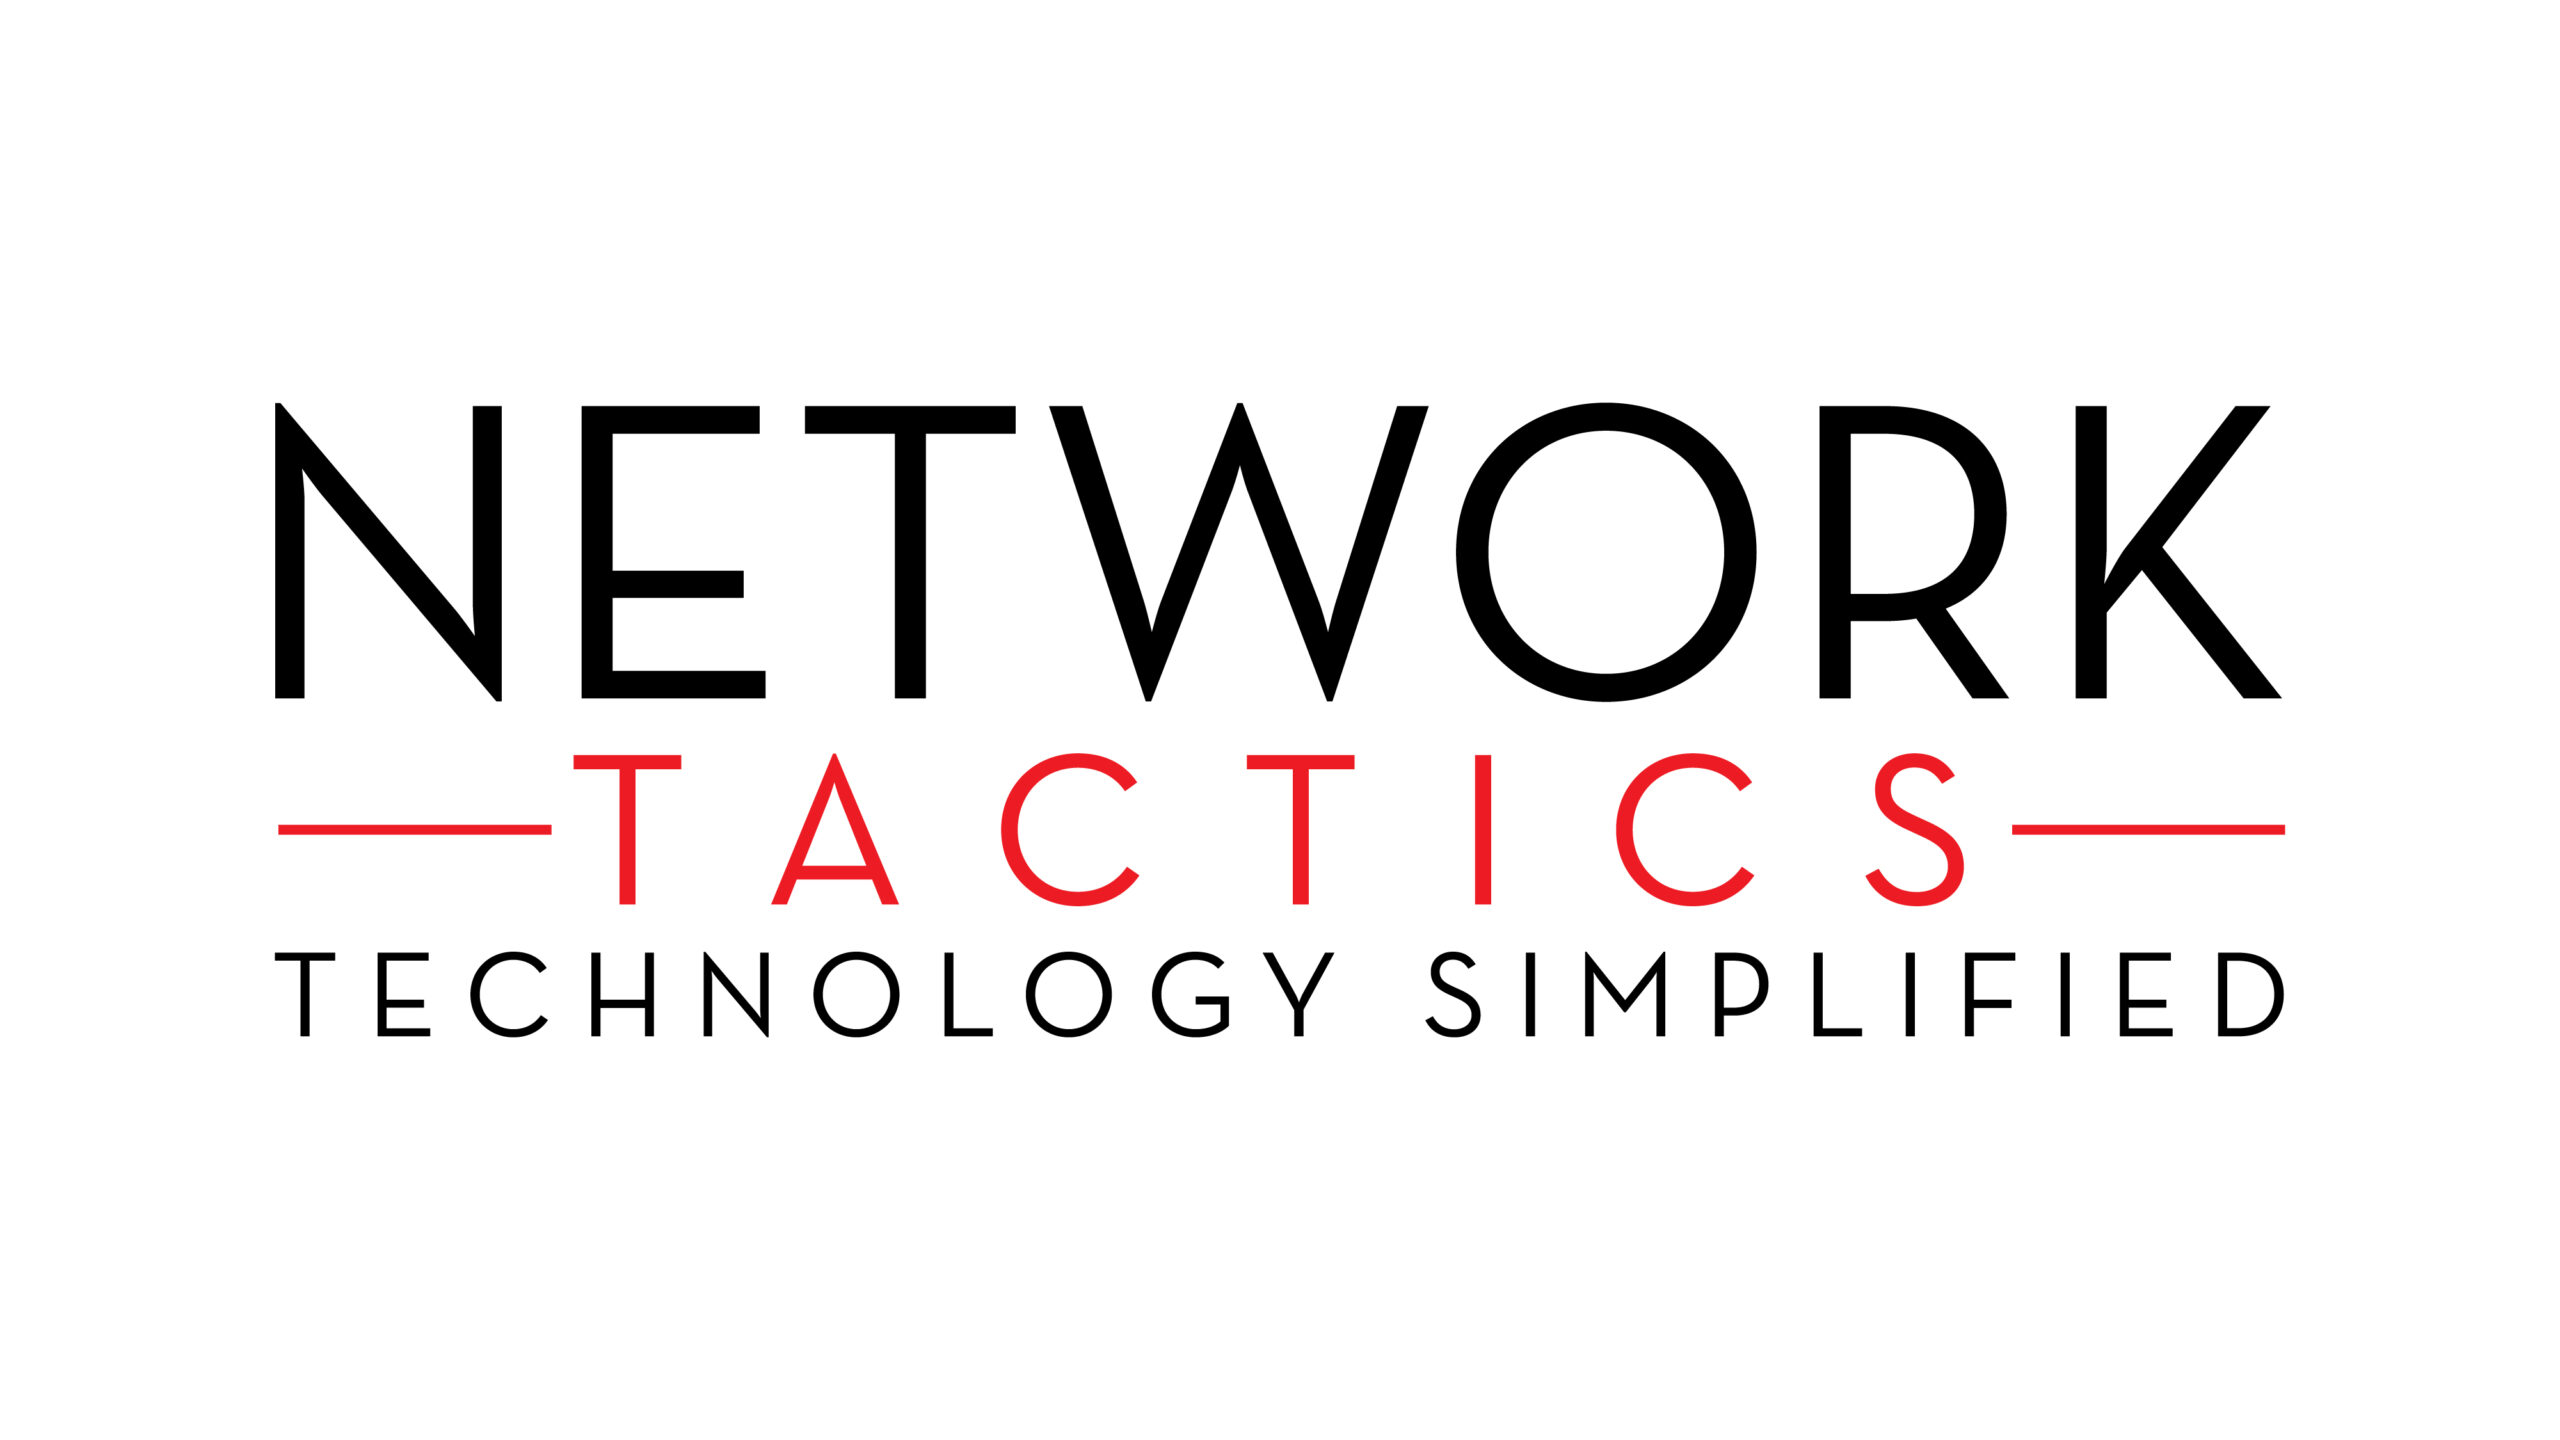 Network Tactics: Mandeville Based IT Services